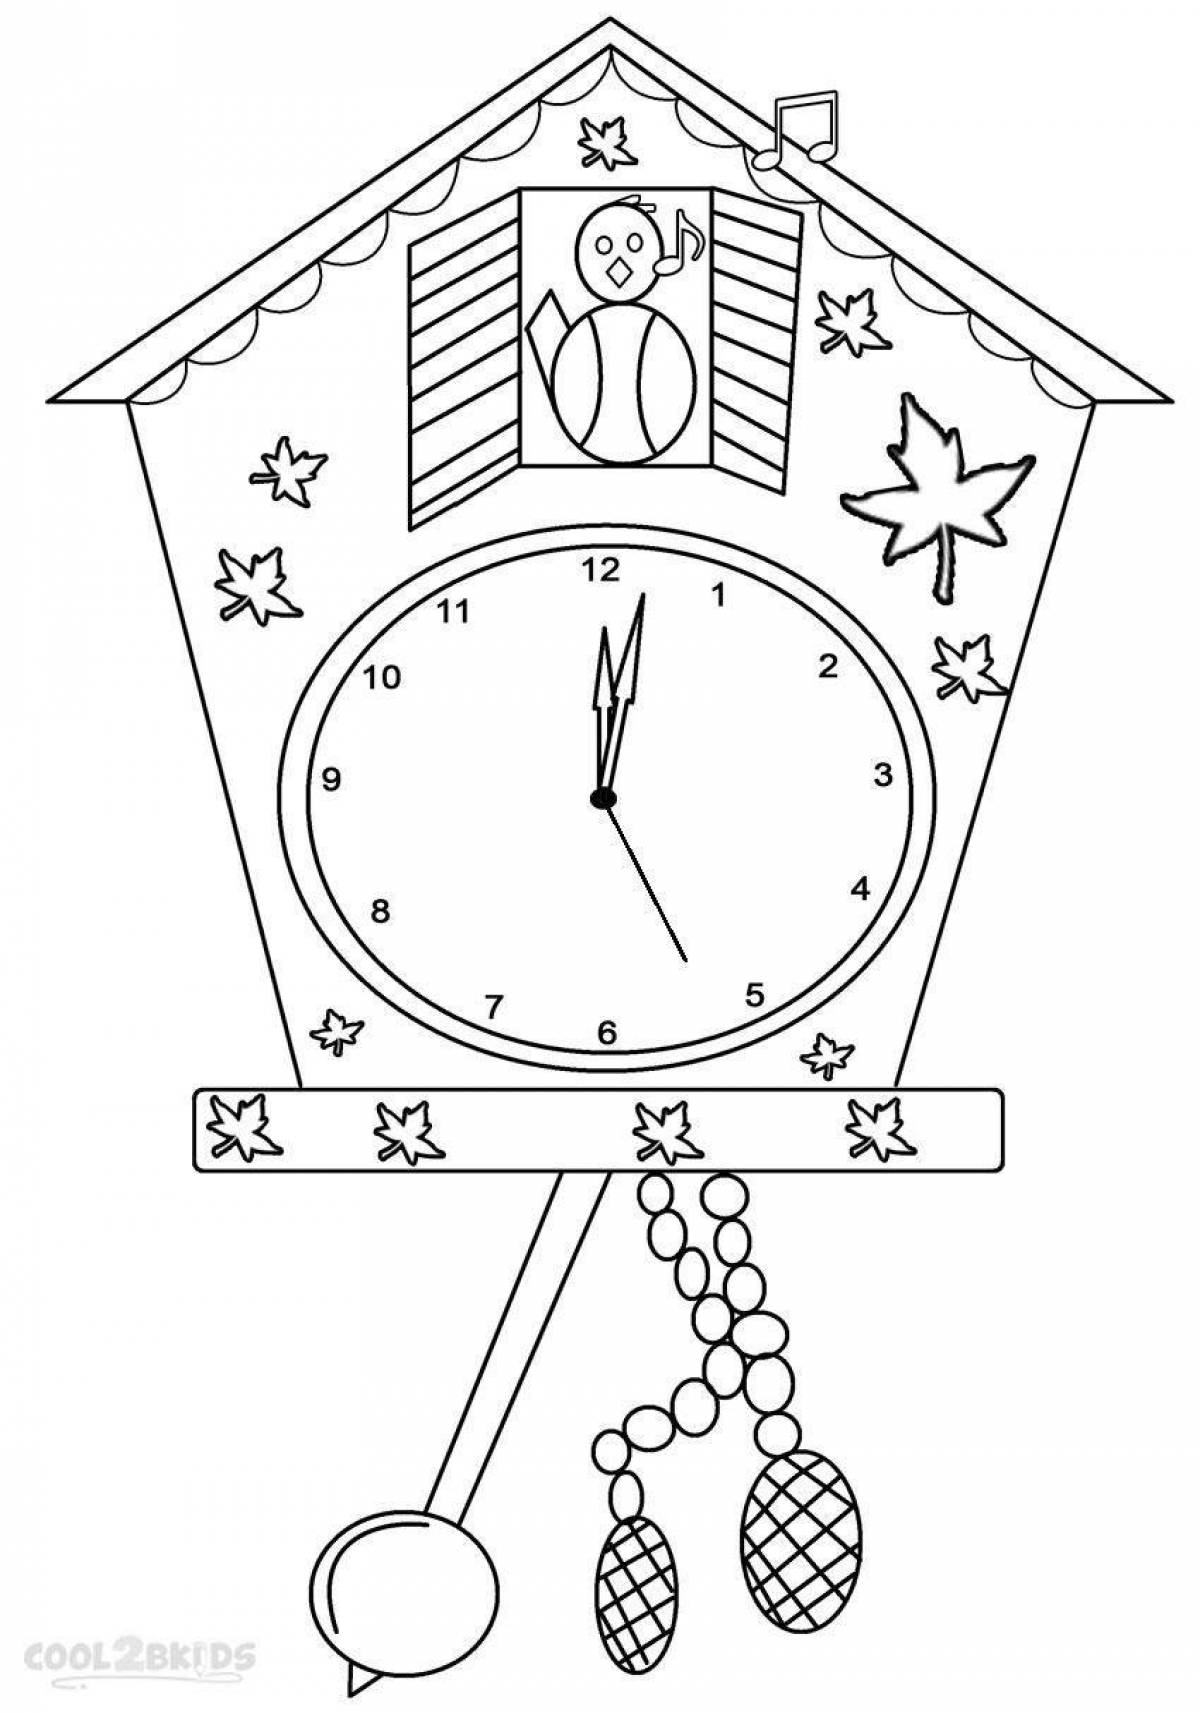 Coloring page luxury cuckoo clock